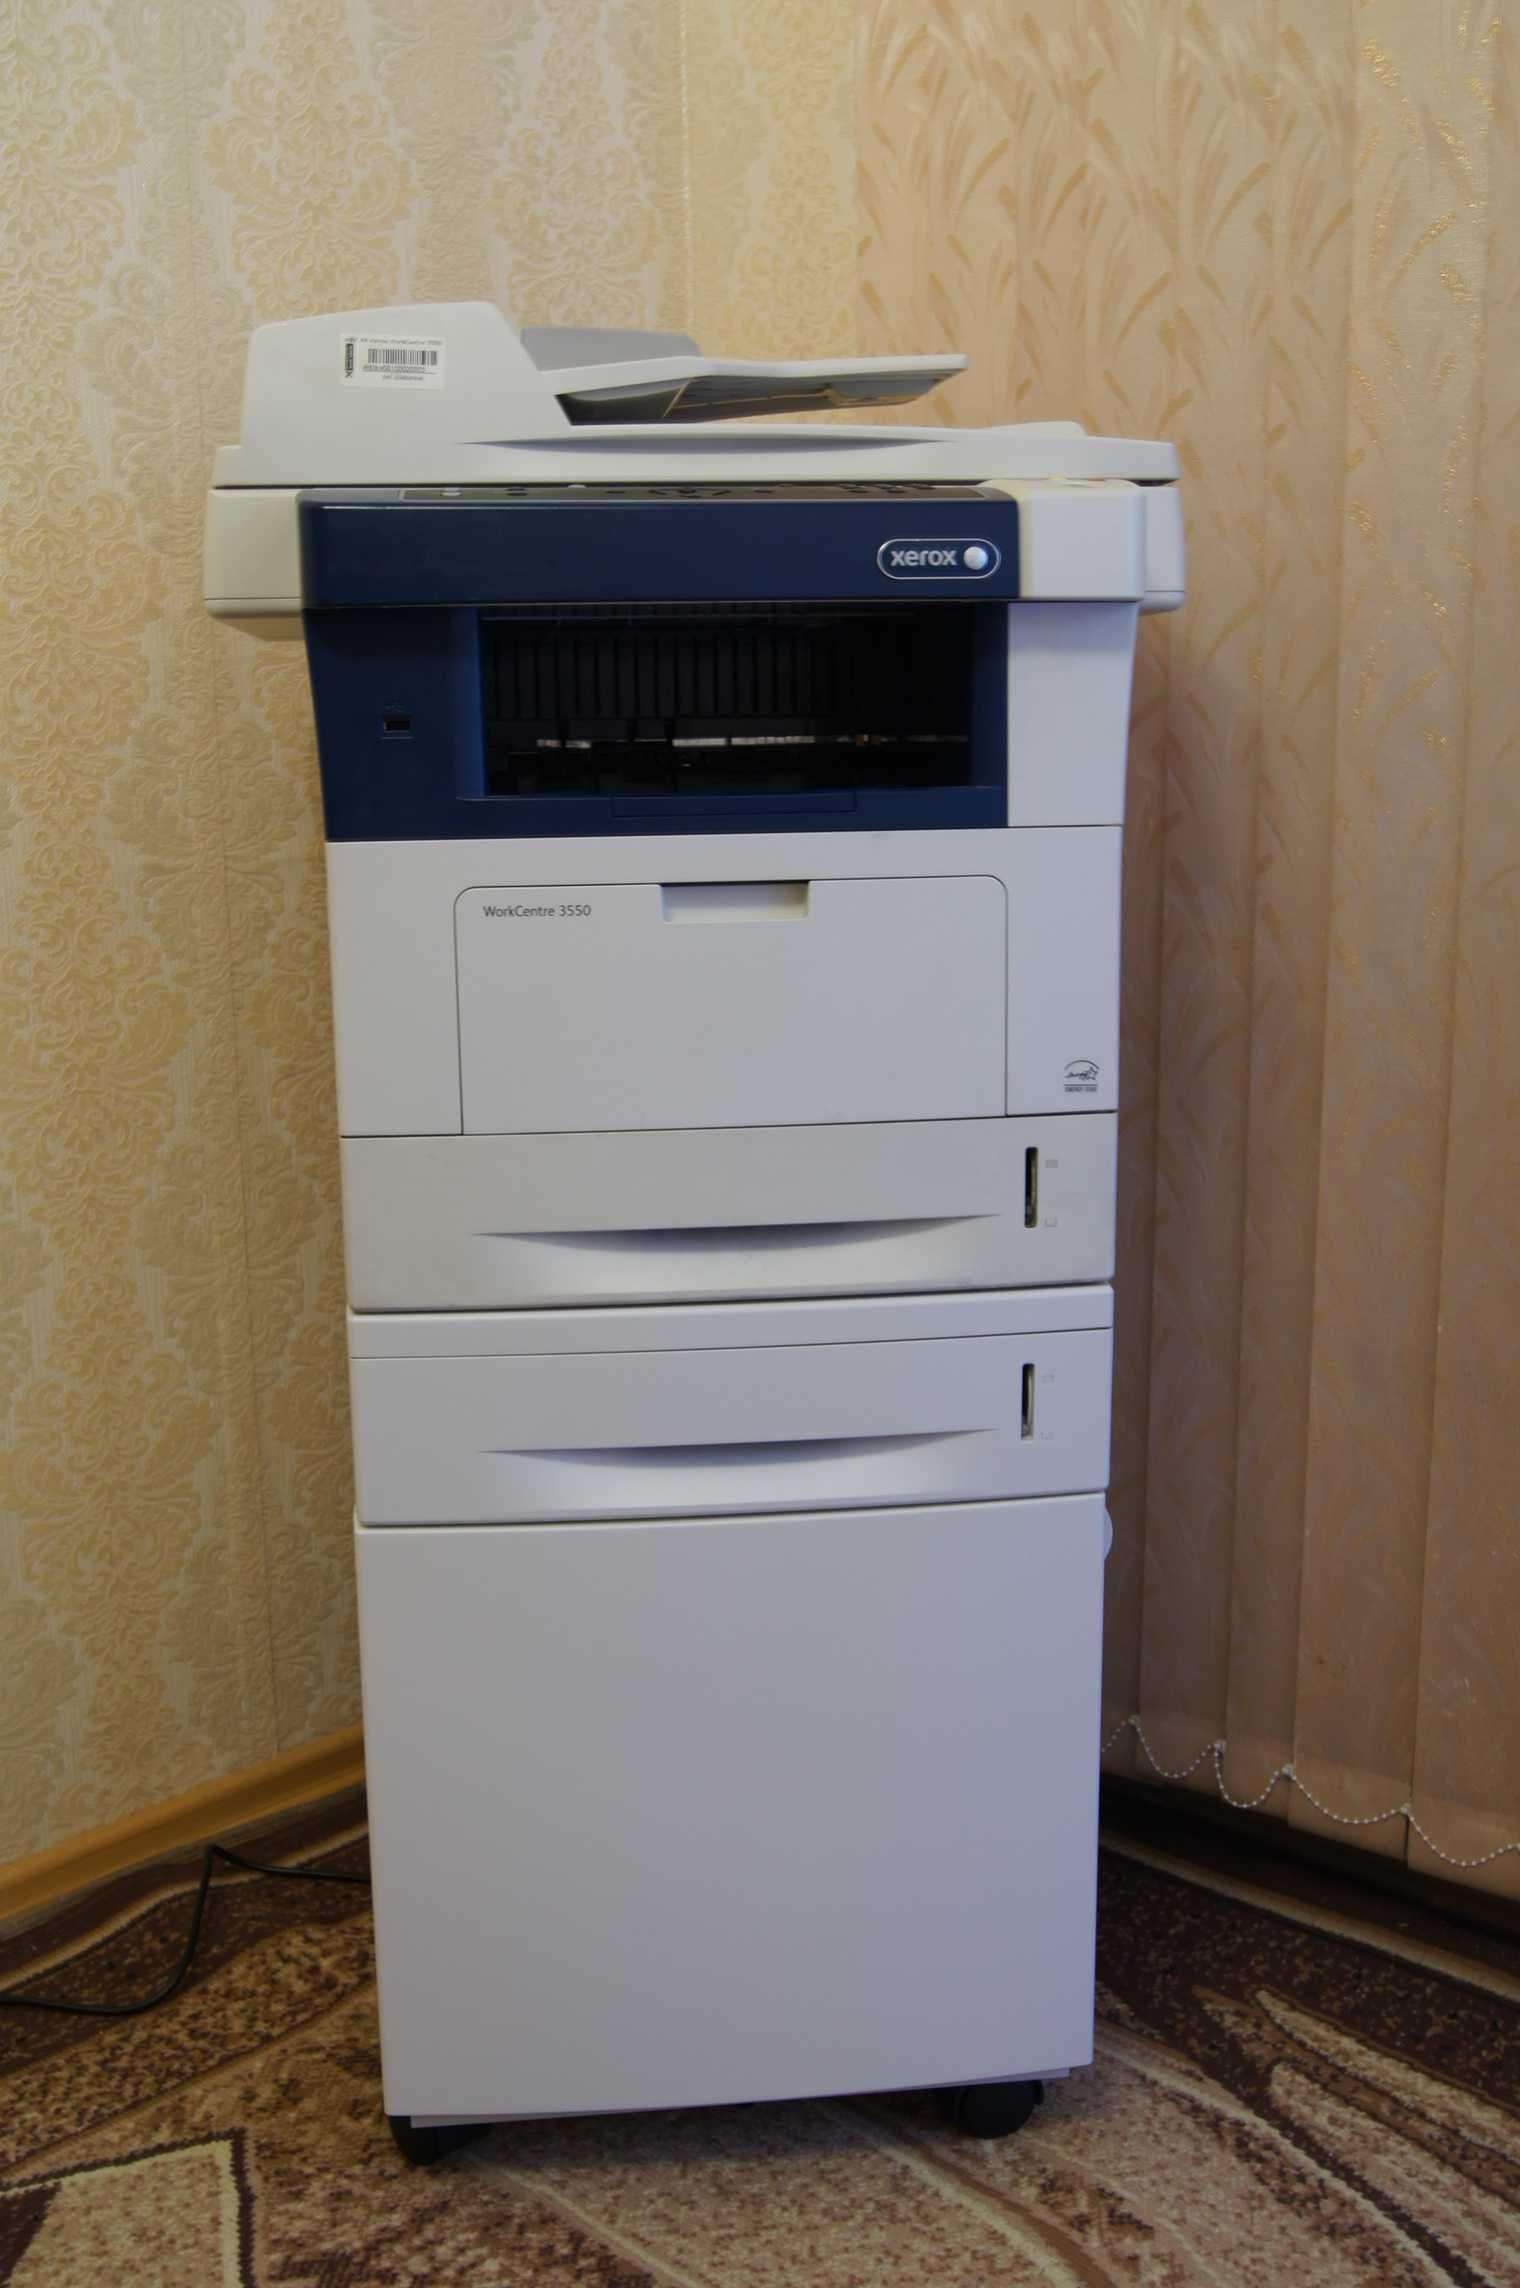 Продам Скоростной МФУ Xerox 3550 для Дома, Офиса или Копи - Центра.